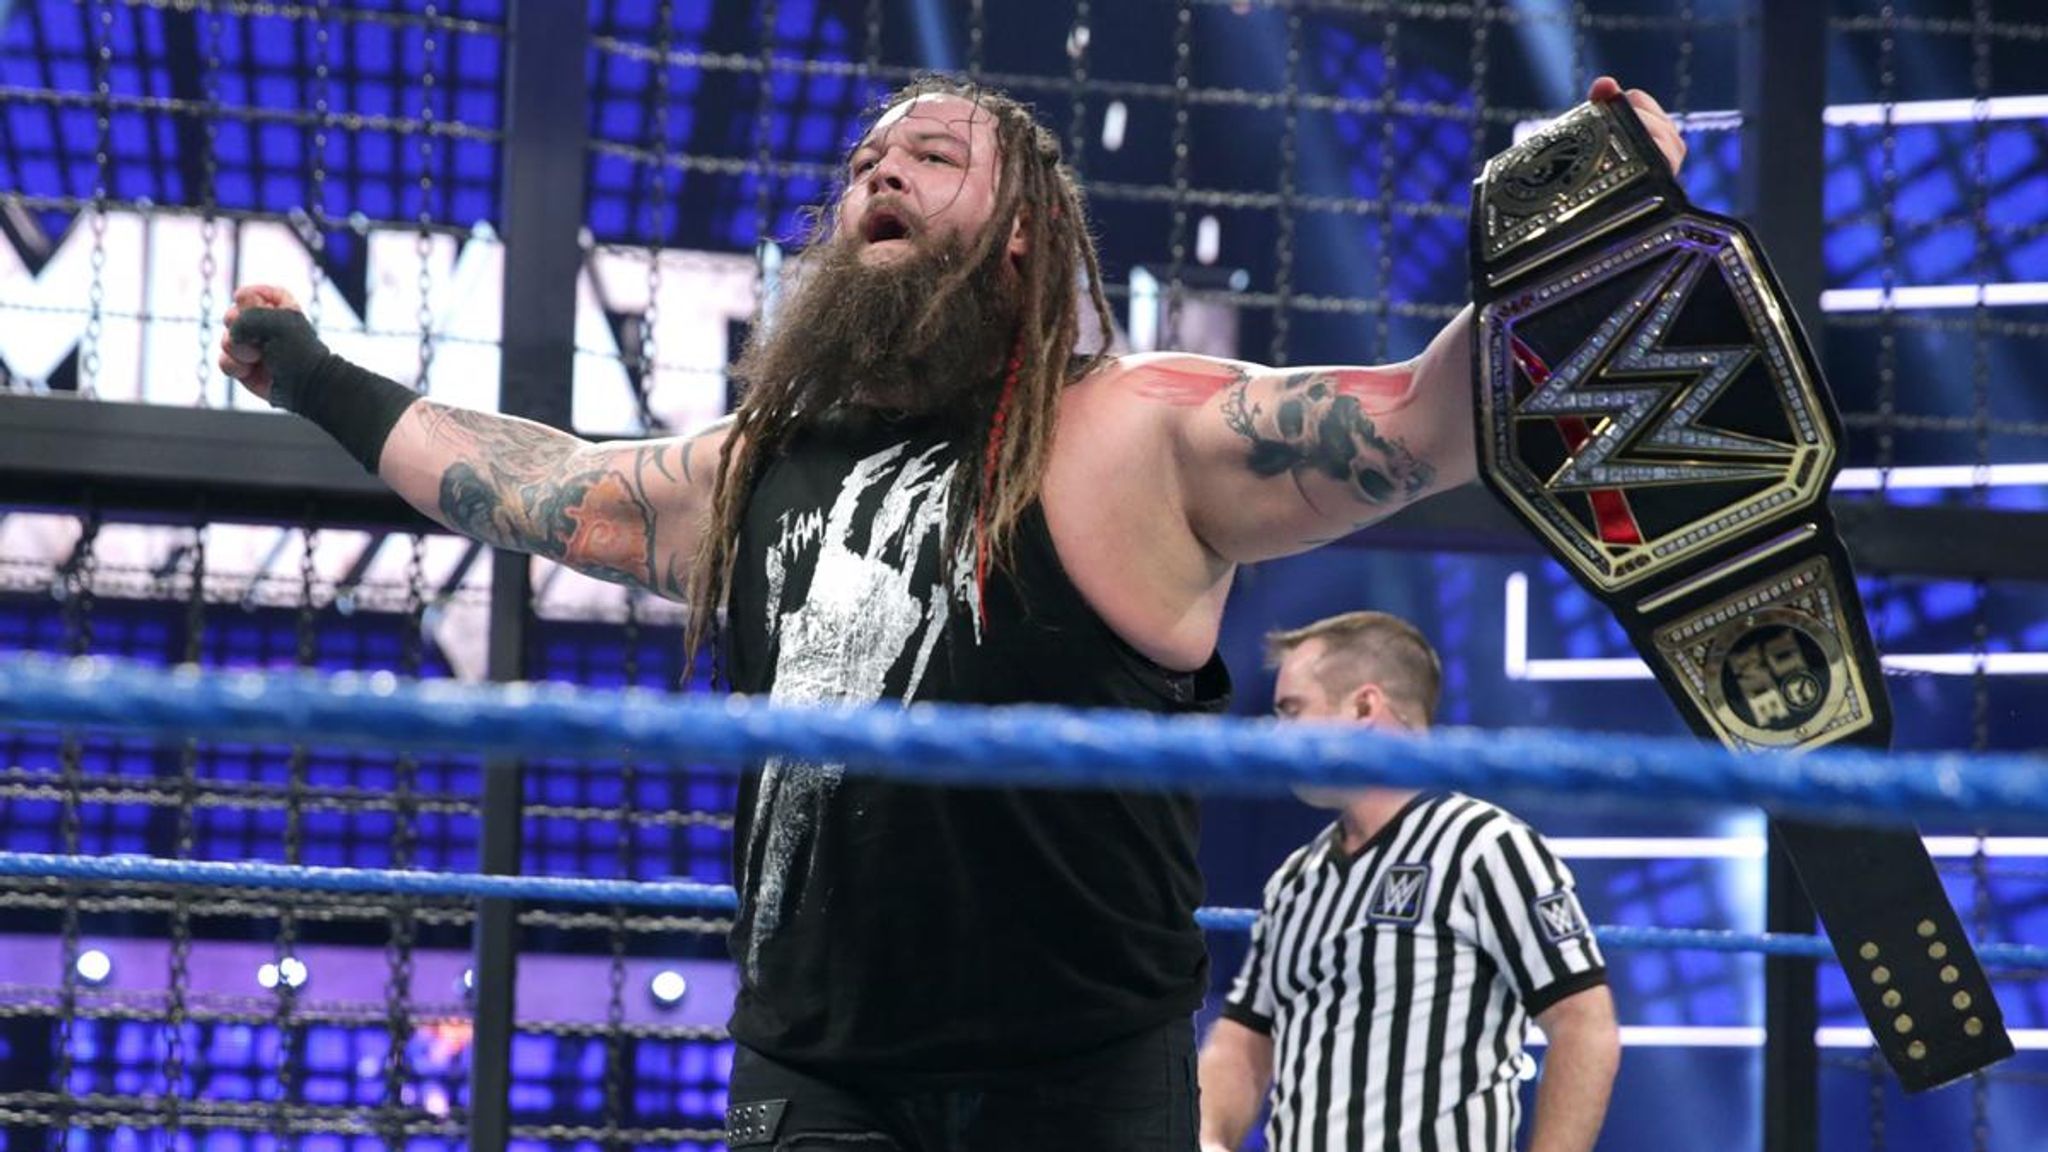 Bray Wyatt as the champion